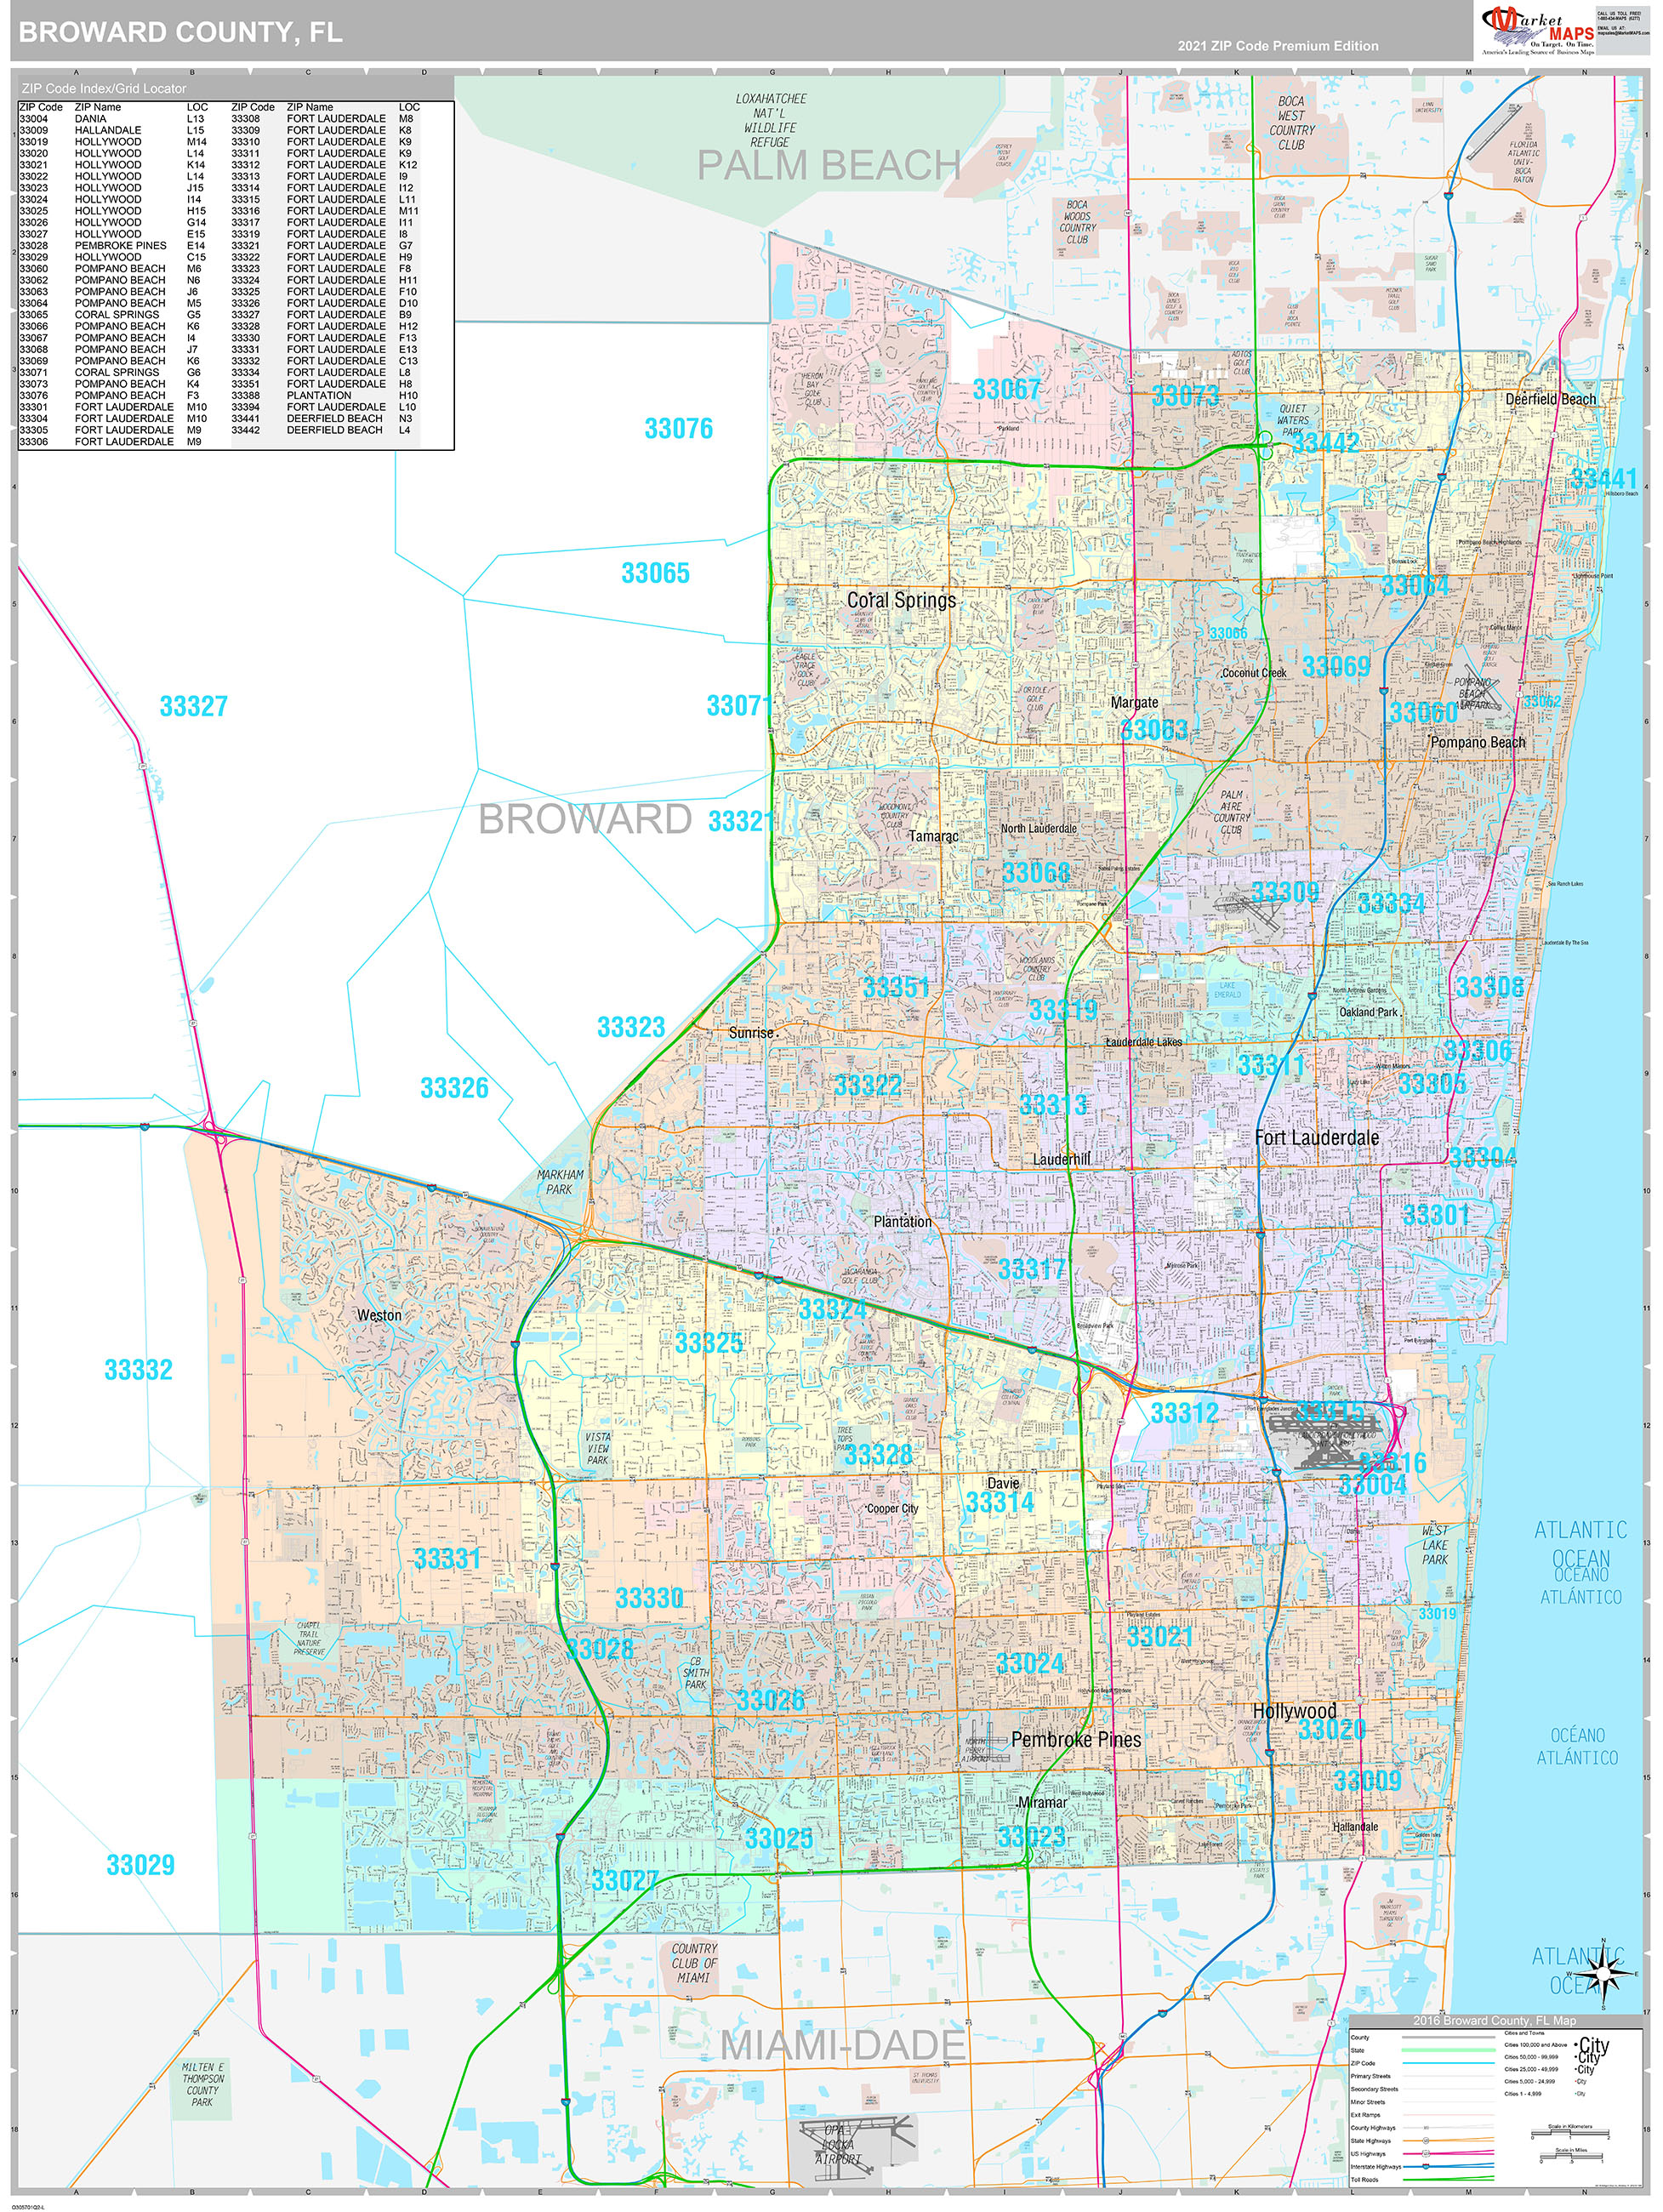 Broward County, FL Wall Map Premium Style by MarketMAPS - MapSales